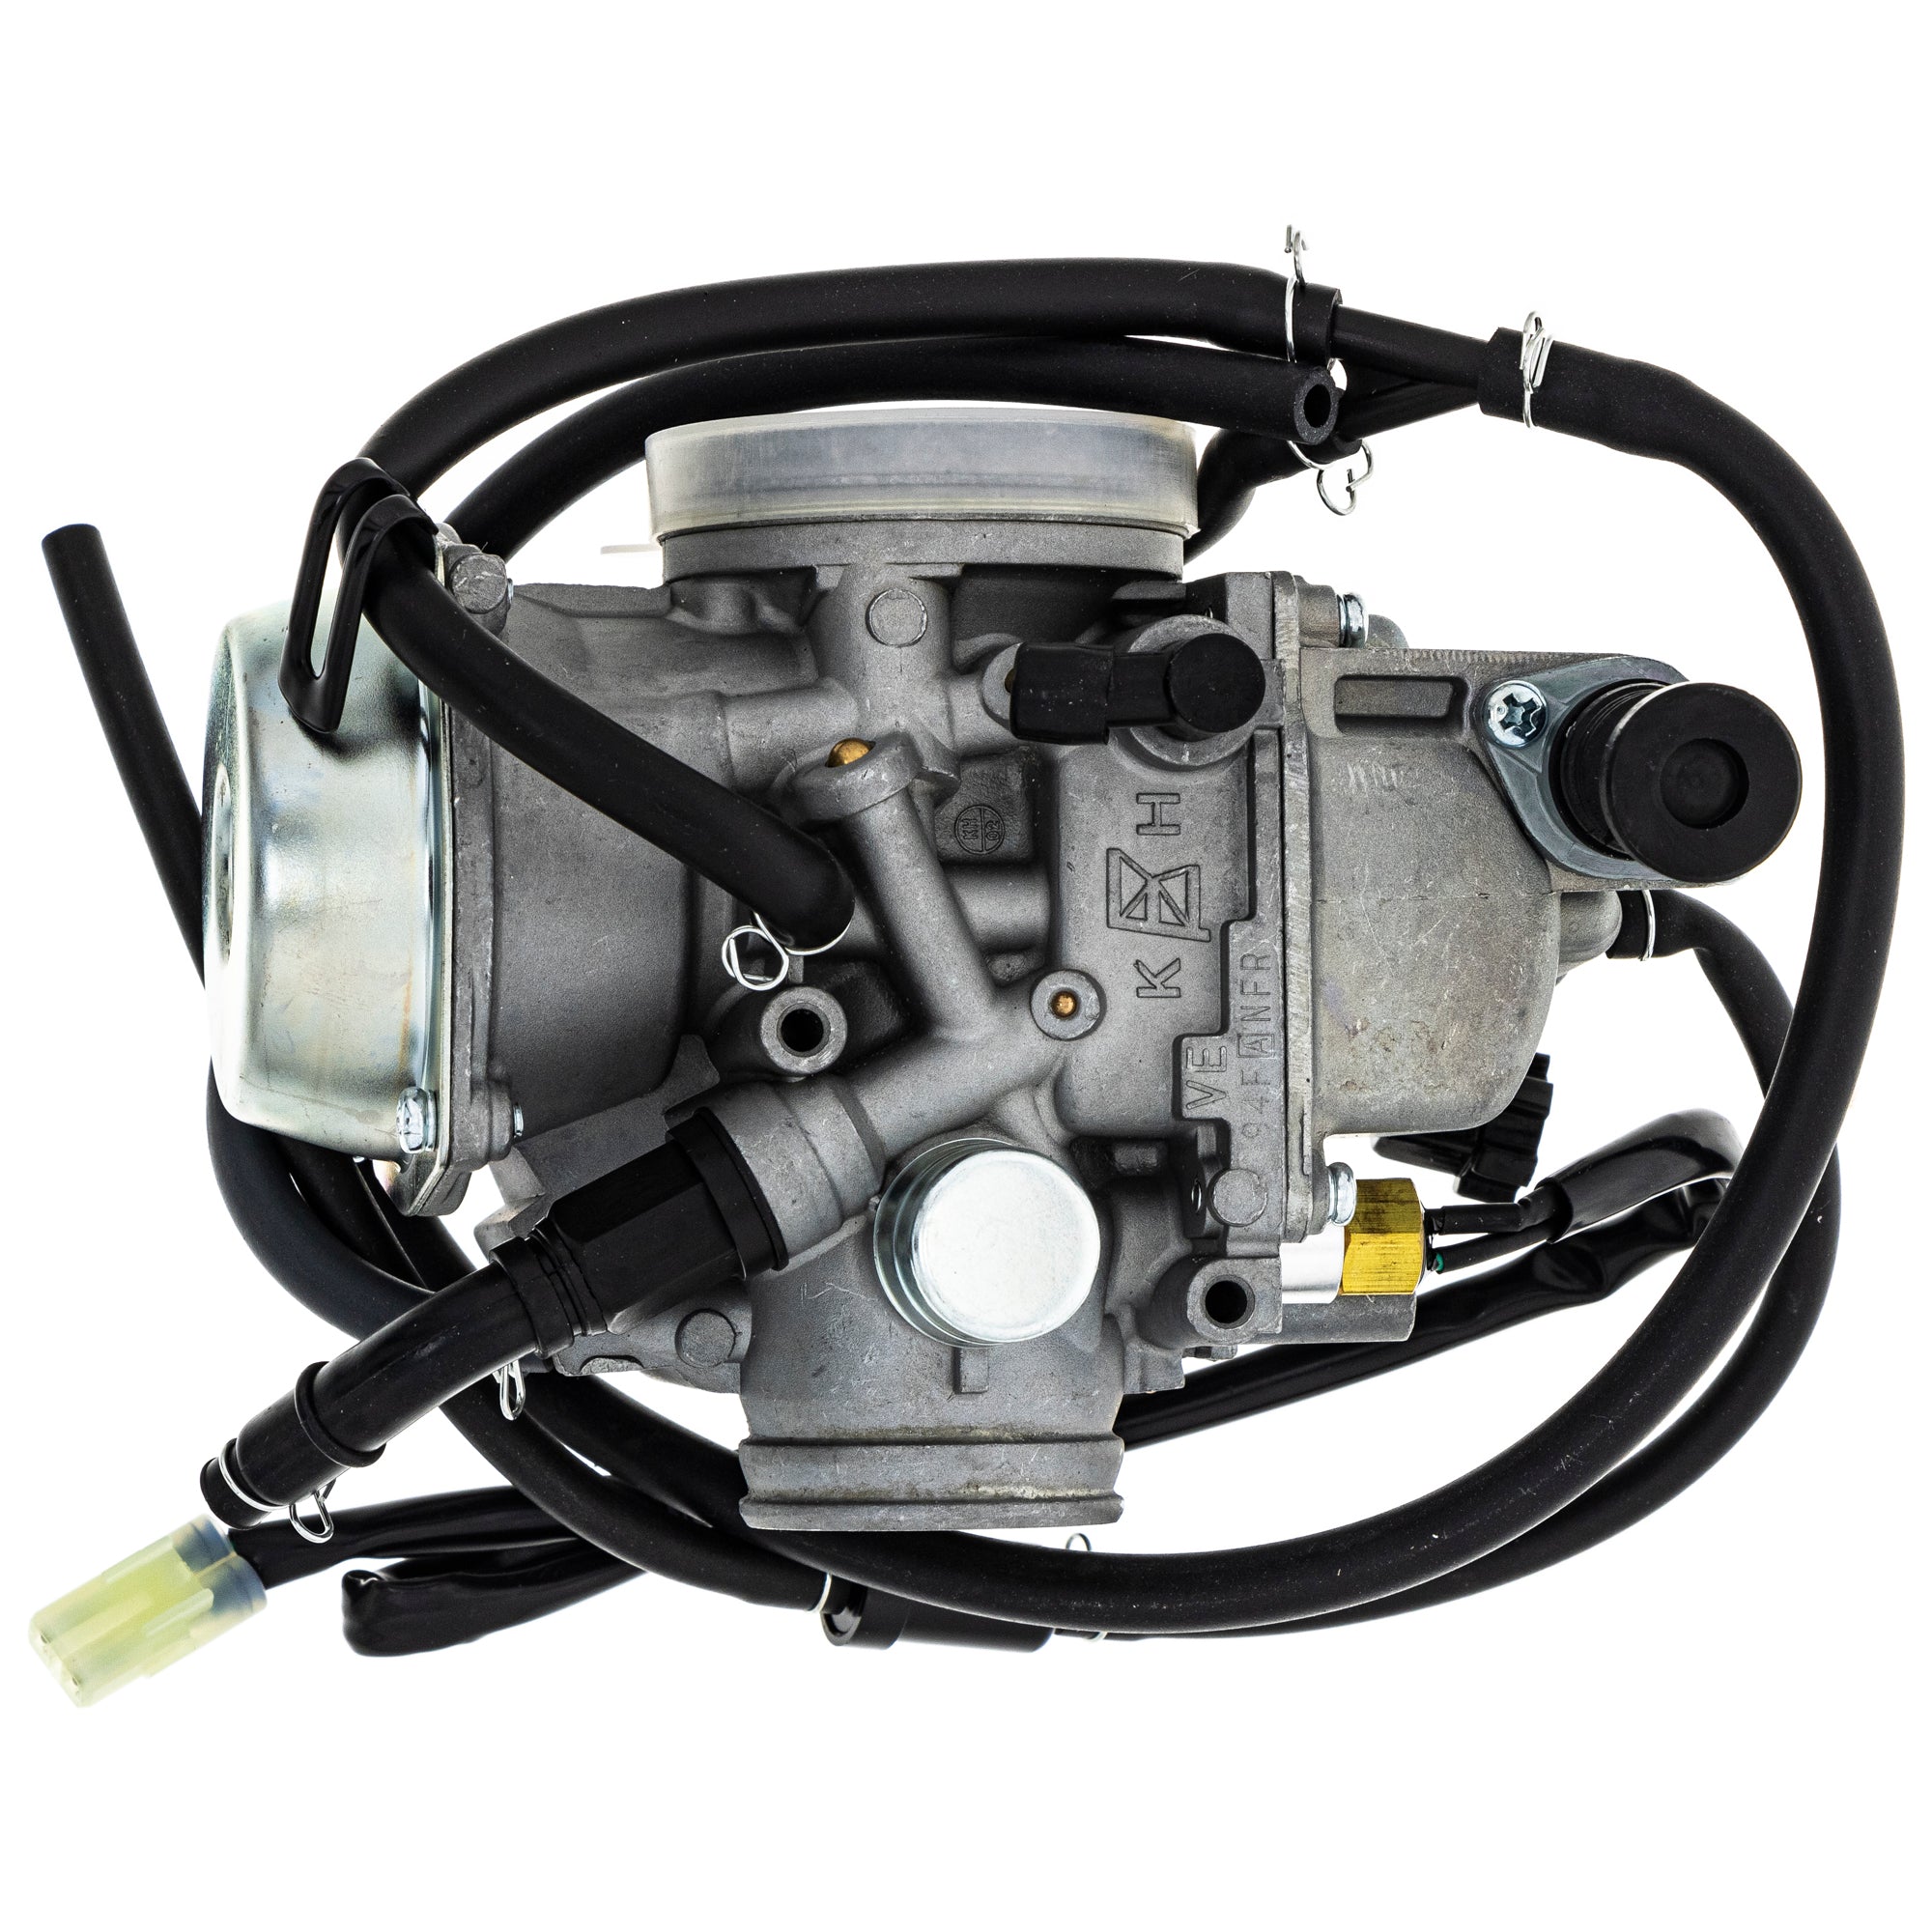 For HONDA RANCHER 350 TRX350 Carburetor Carb Assembly 16100-HN5-M41  2000-2006